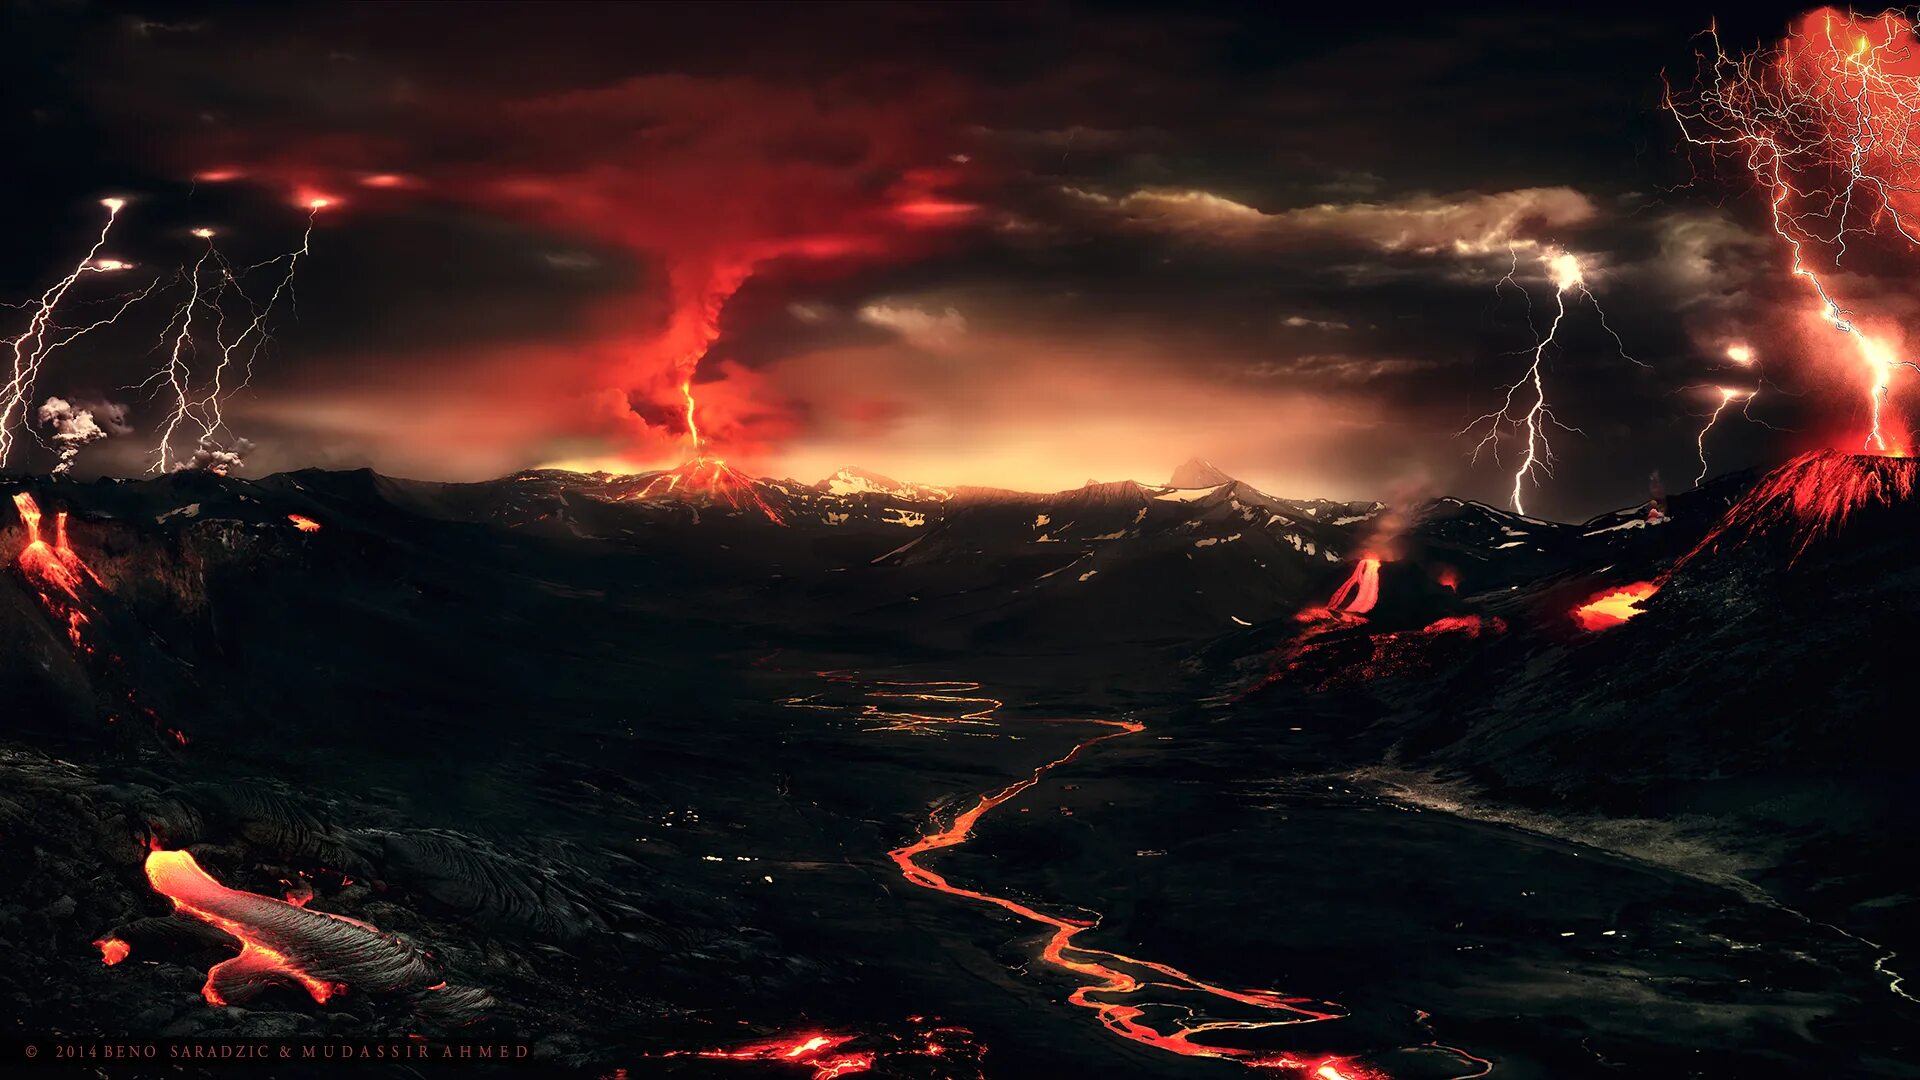 Кипящее небо. Франциско Негрони гроза вулкан. Извержение вулкана лава. Извержение вулкана Пуйеуэ 2011. Вулканический пейзаж.